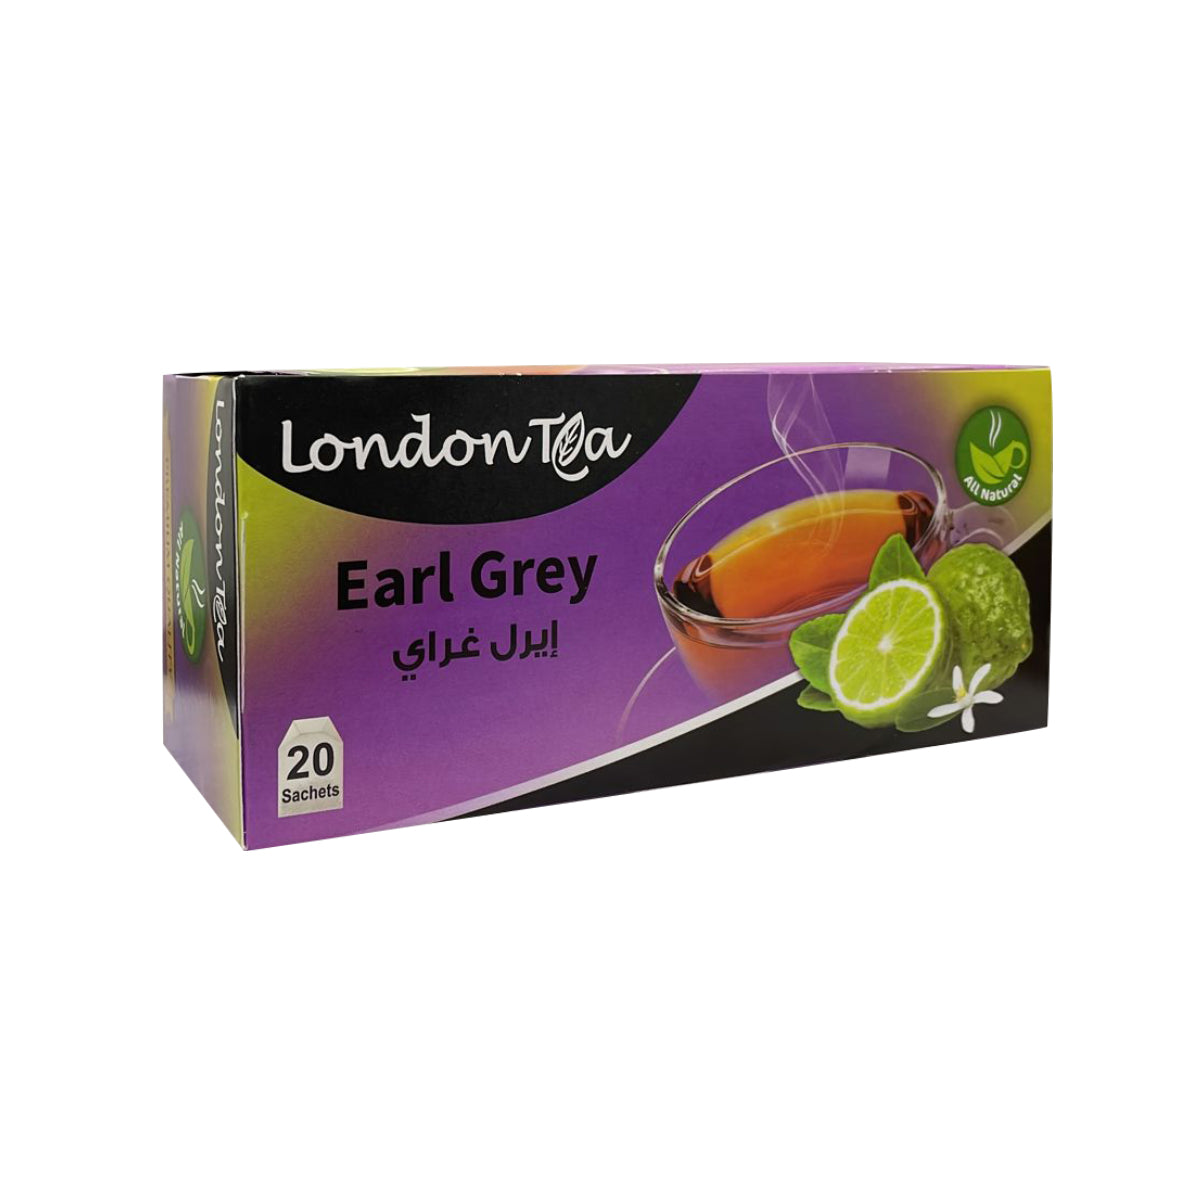 London Tea Earl Grey - 20 bags